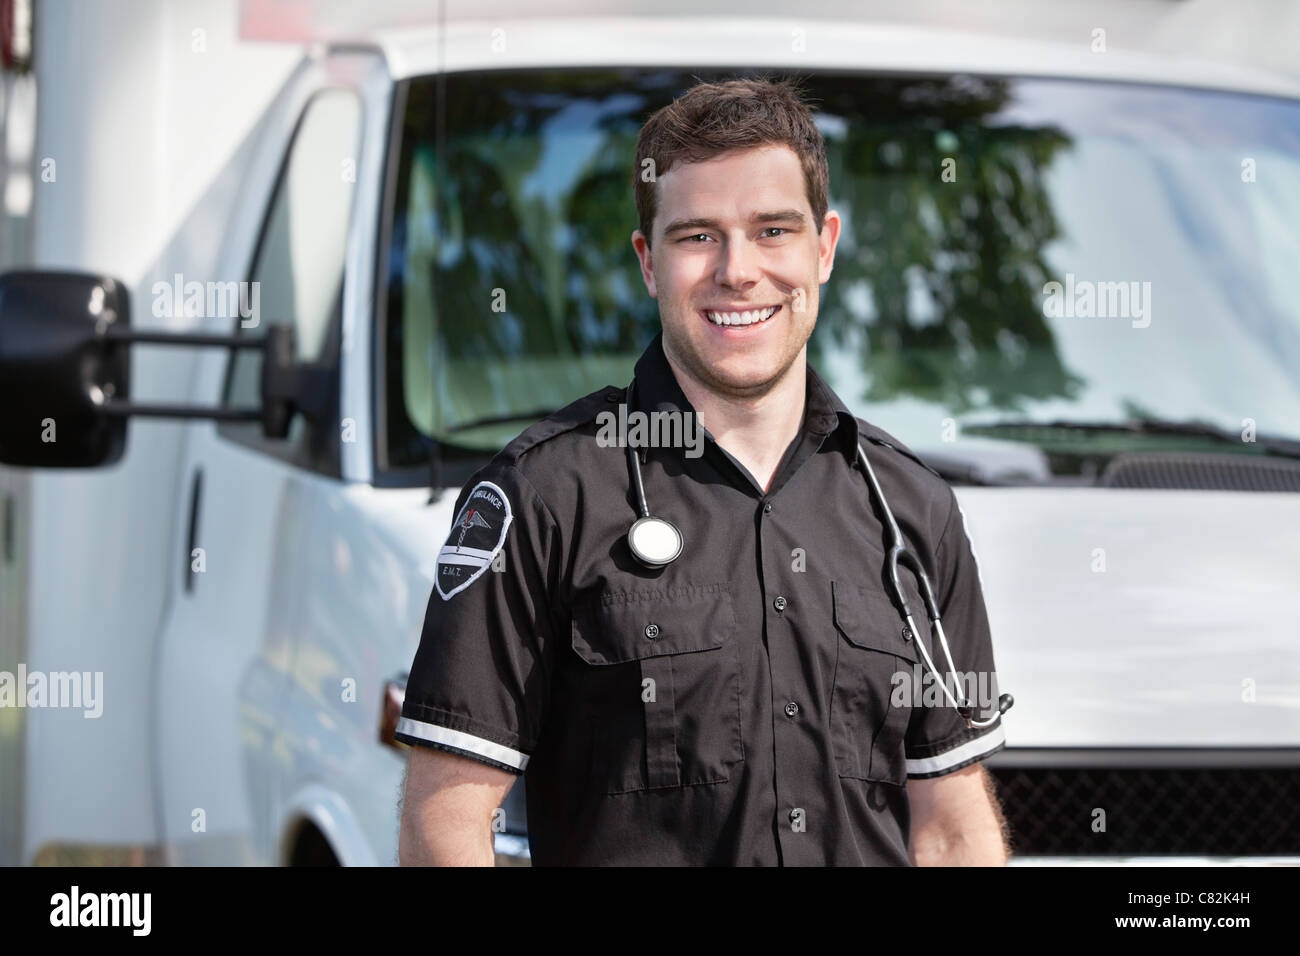 Portrait of smiling man in front of ambulance ambulancier Banque D'Images